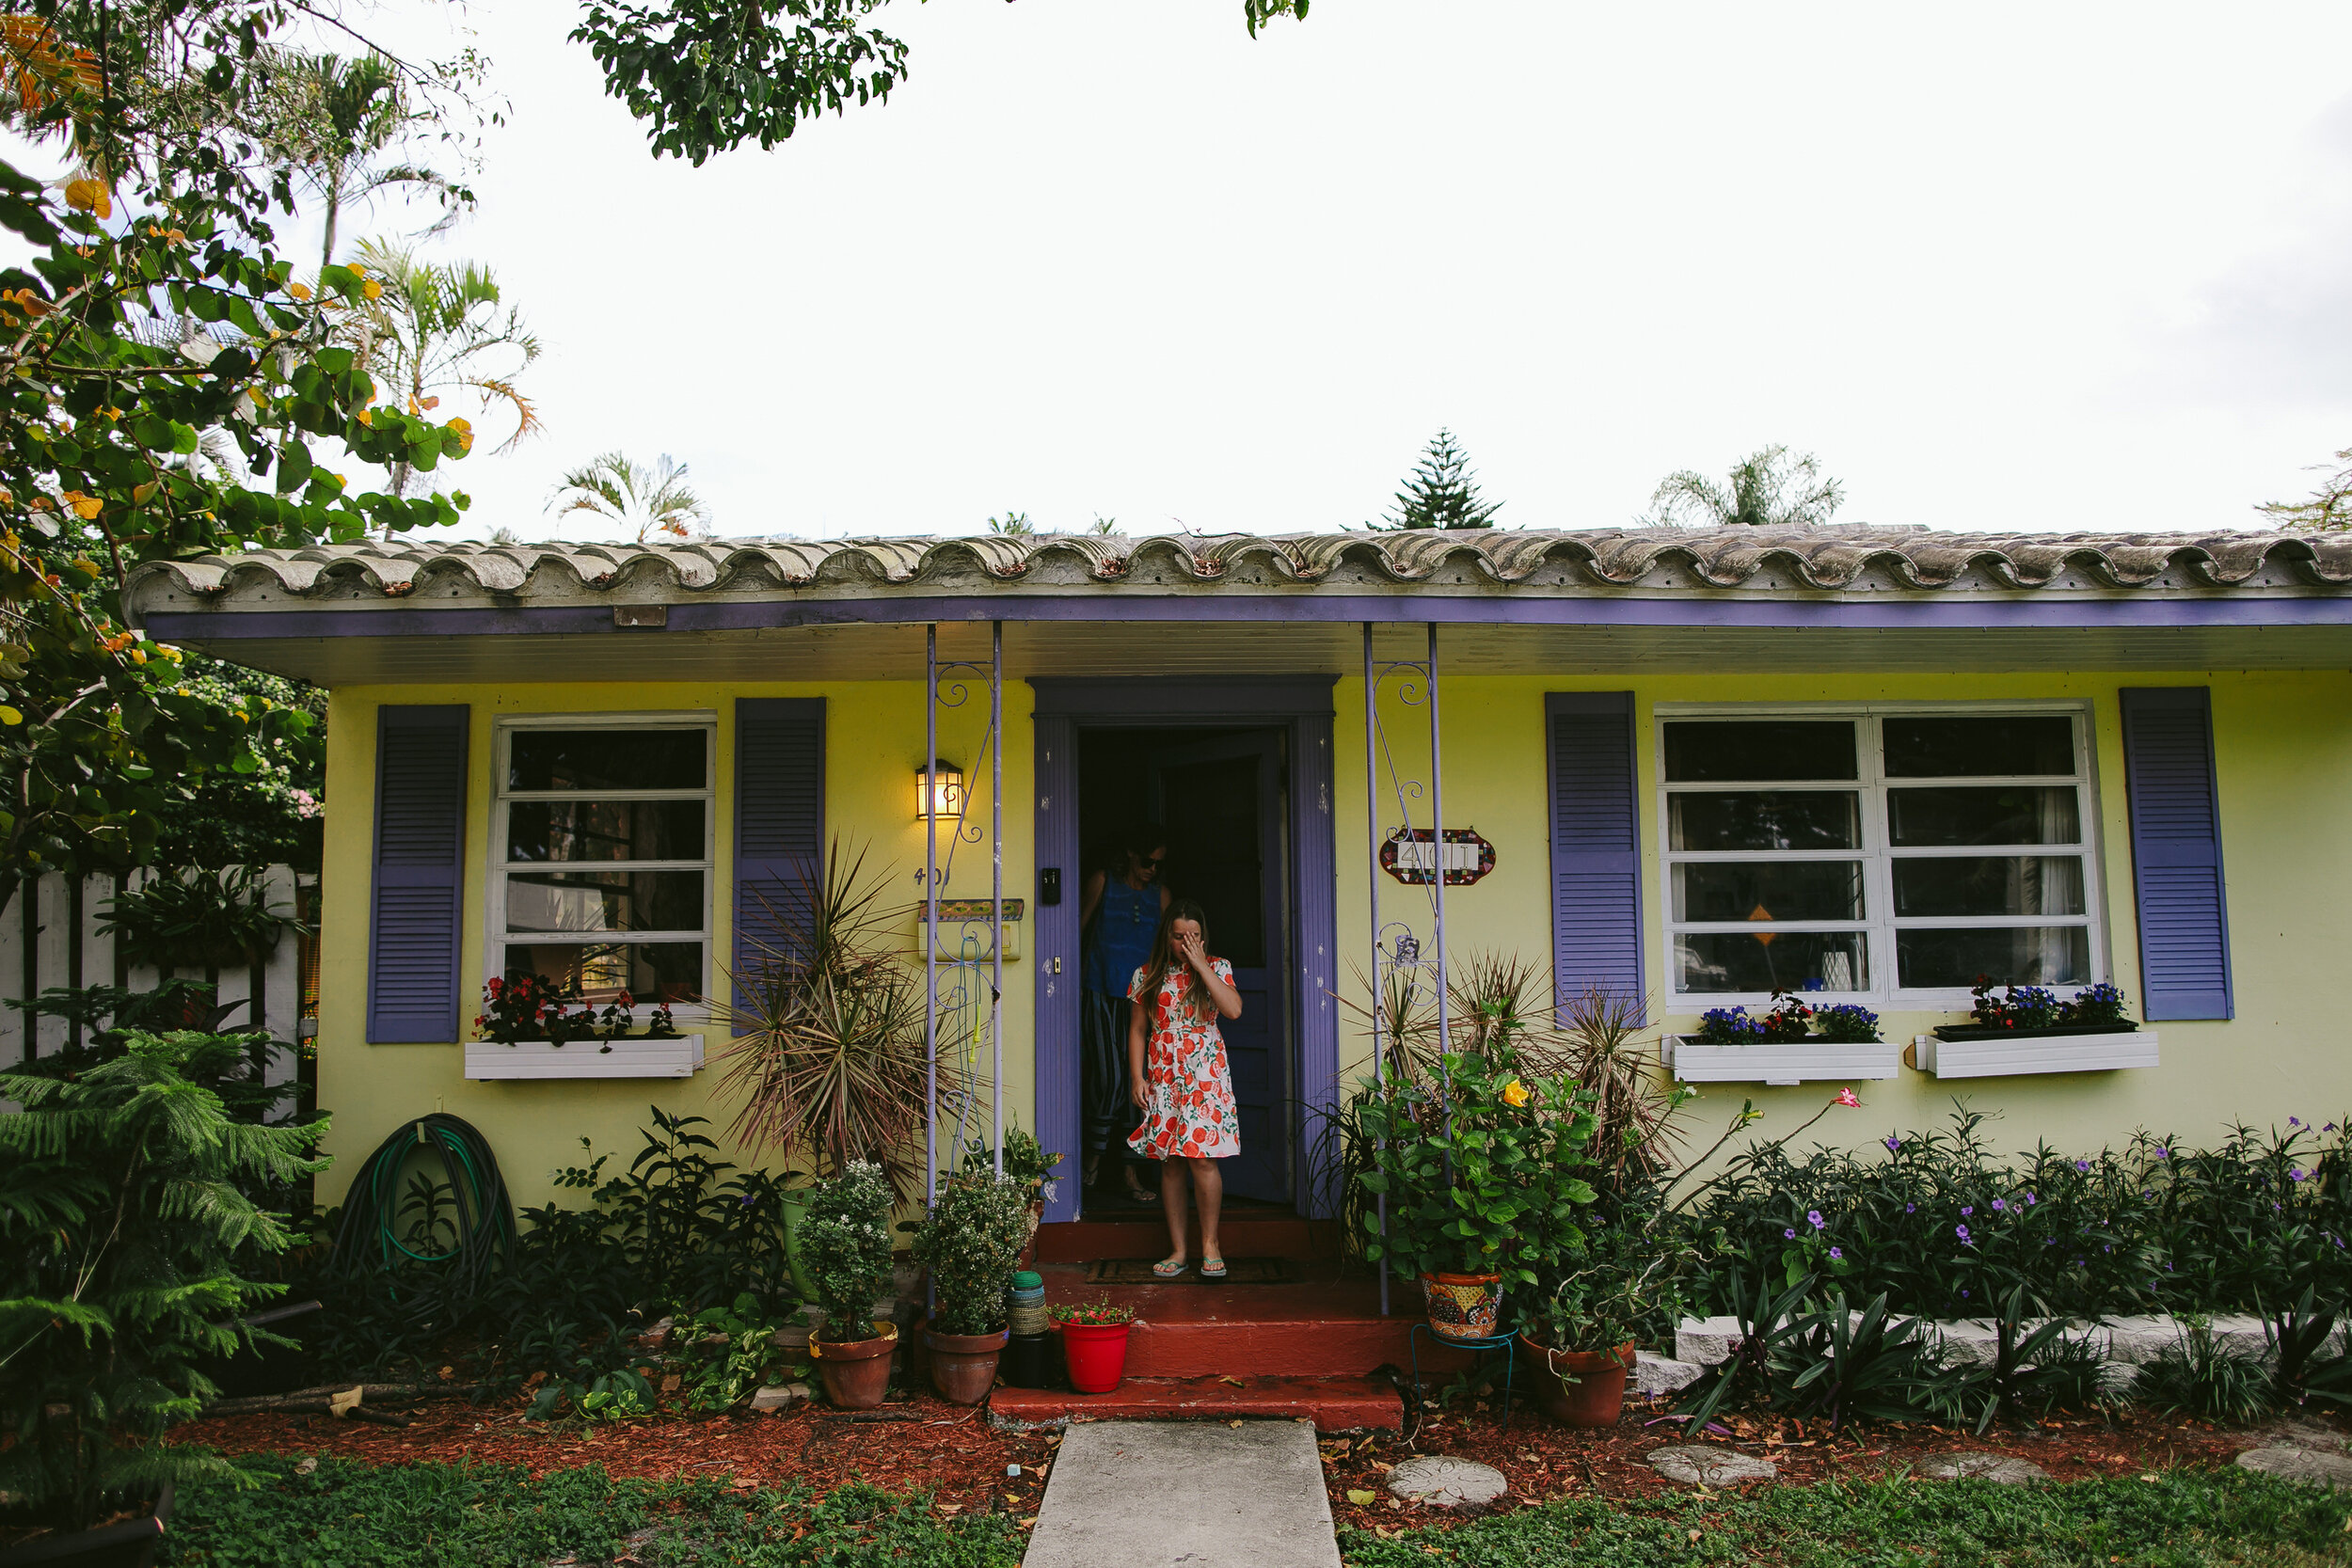 Hollywood-Florida-Family-Day-In-The-Life-Experience-Tiny-House-Photo-40.jpg